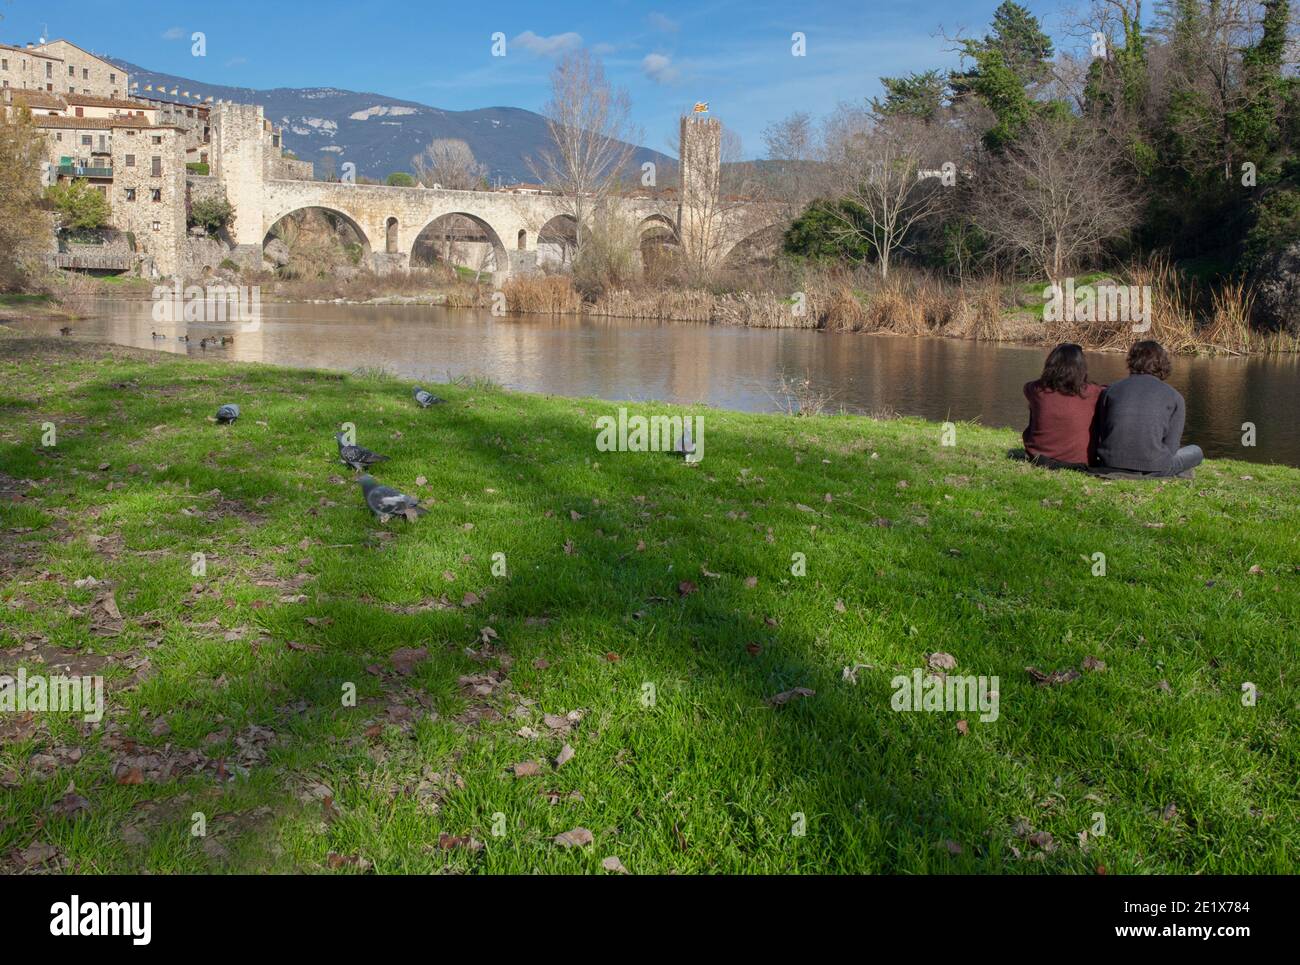 Besalu, Spagna - 28 dicembre 2019: Fiume Fluvia con ponte medievale in fondo, Besalu. Garottxa, Girona, Catalogna, Spagna Foto Stock